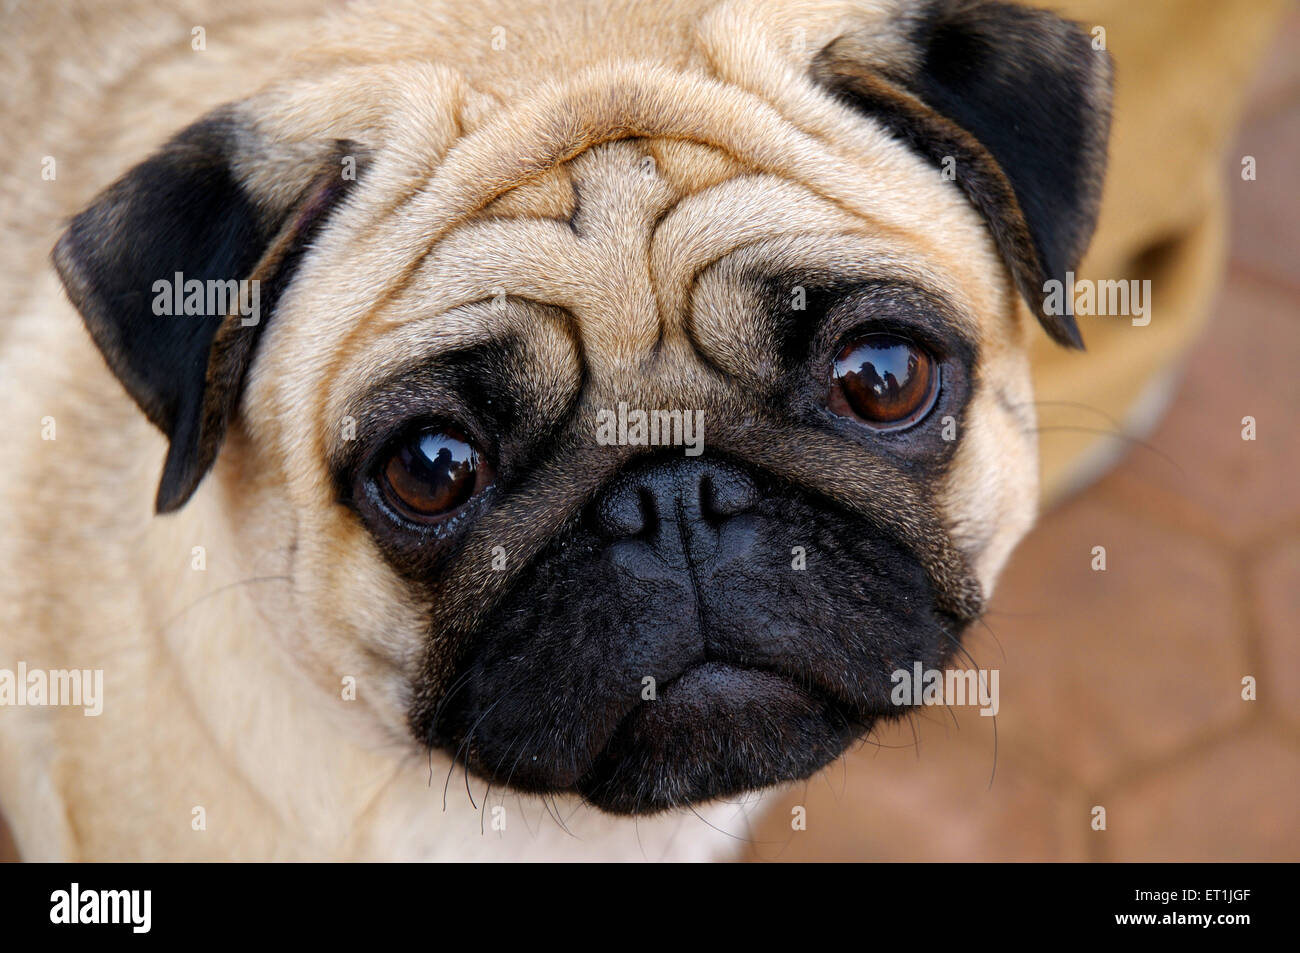 pug dog breed closeup Stock Photo